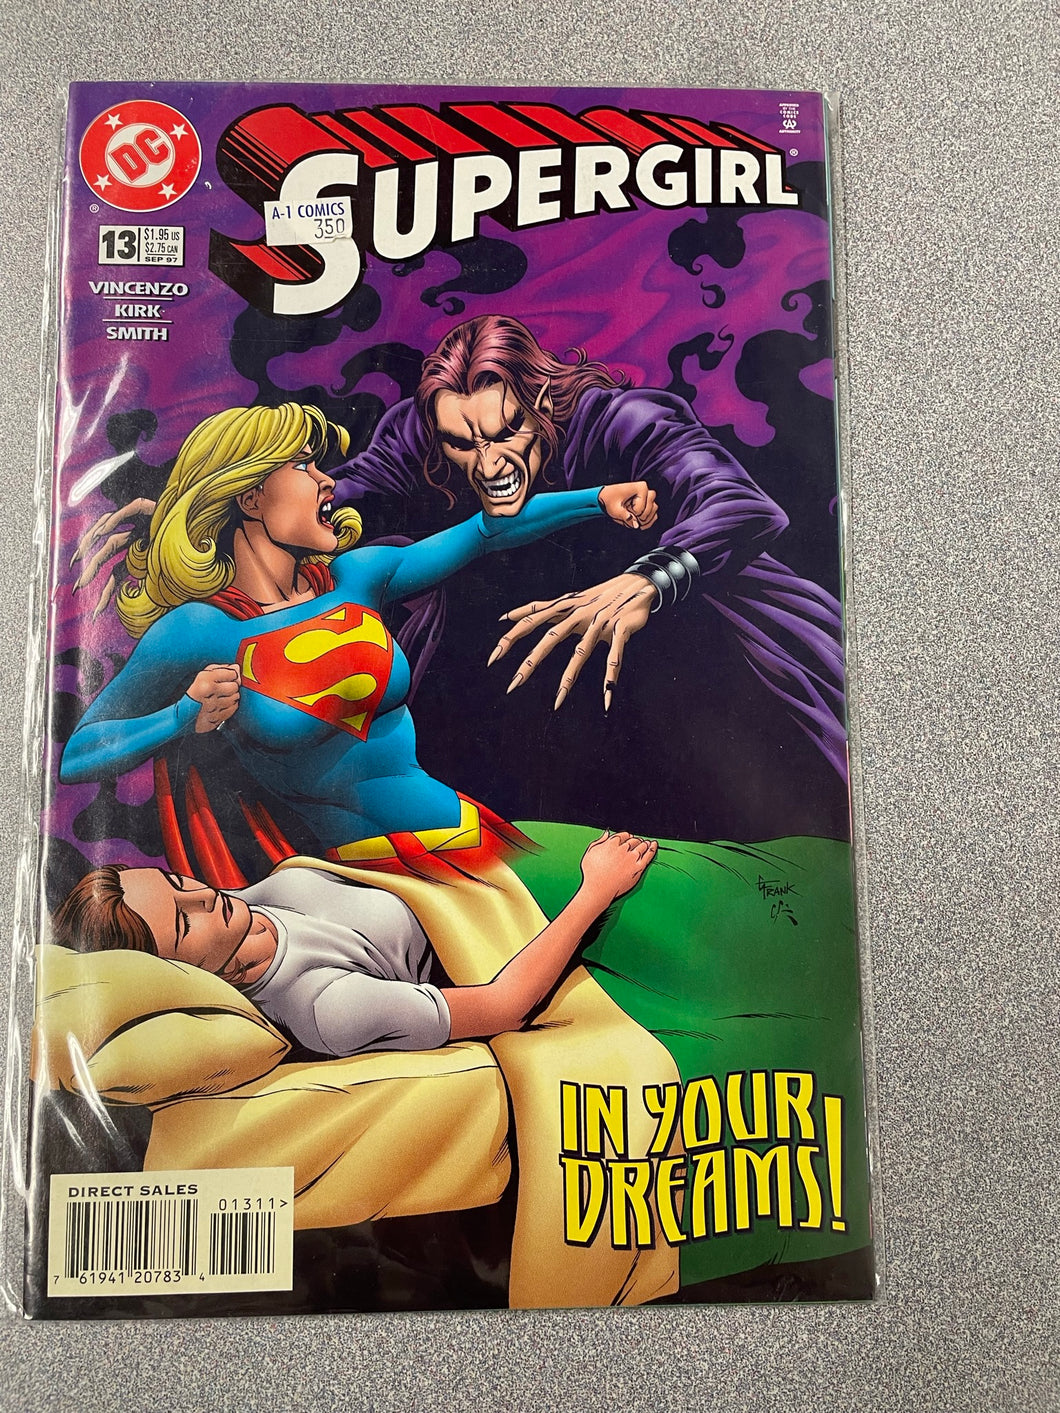 DC Comic Supergirl#13: In Your Dreams, Vincenzo, Darren, et al [Sept 1997] GN 1/23